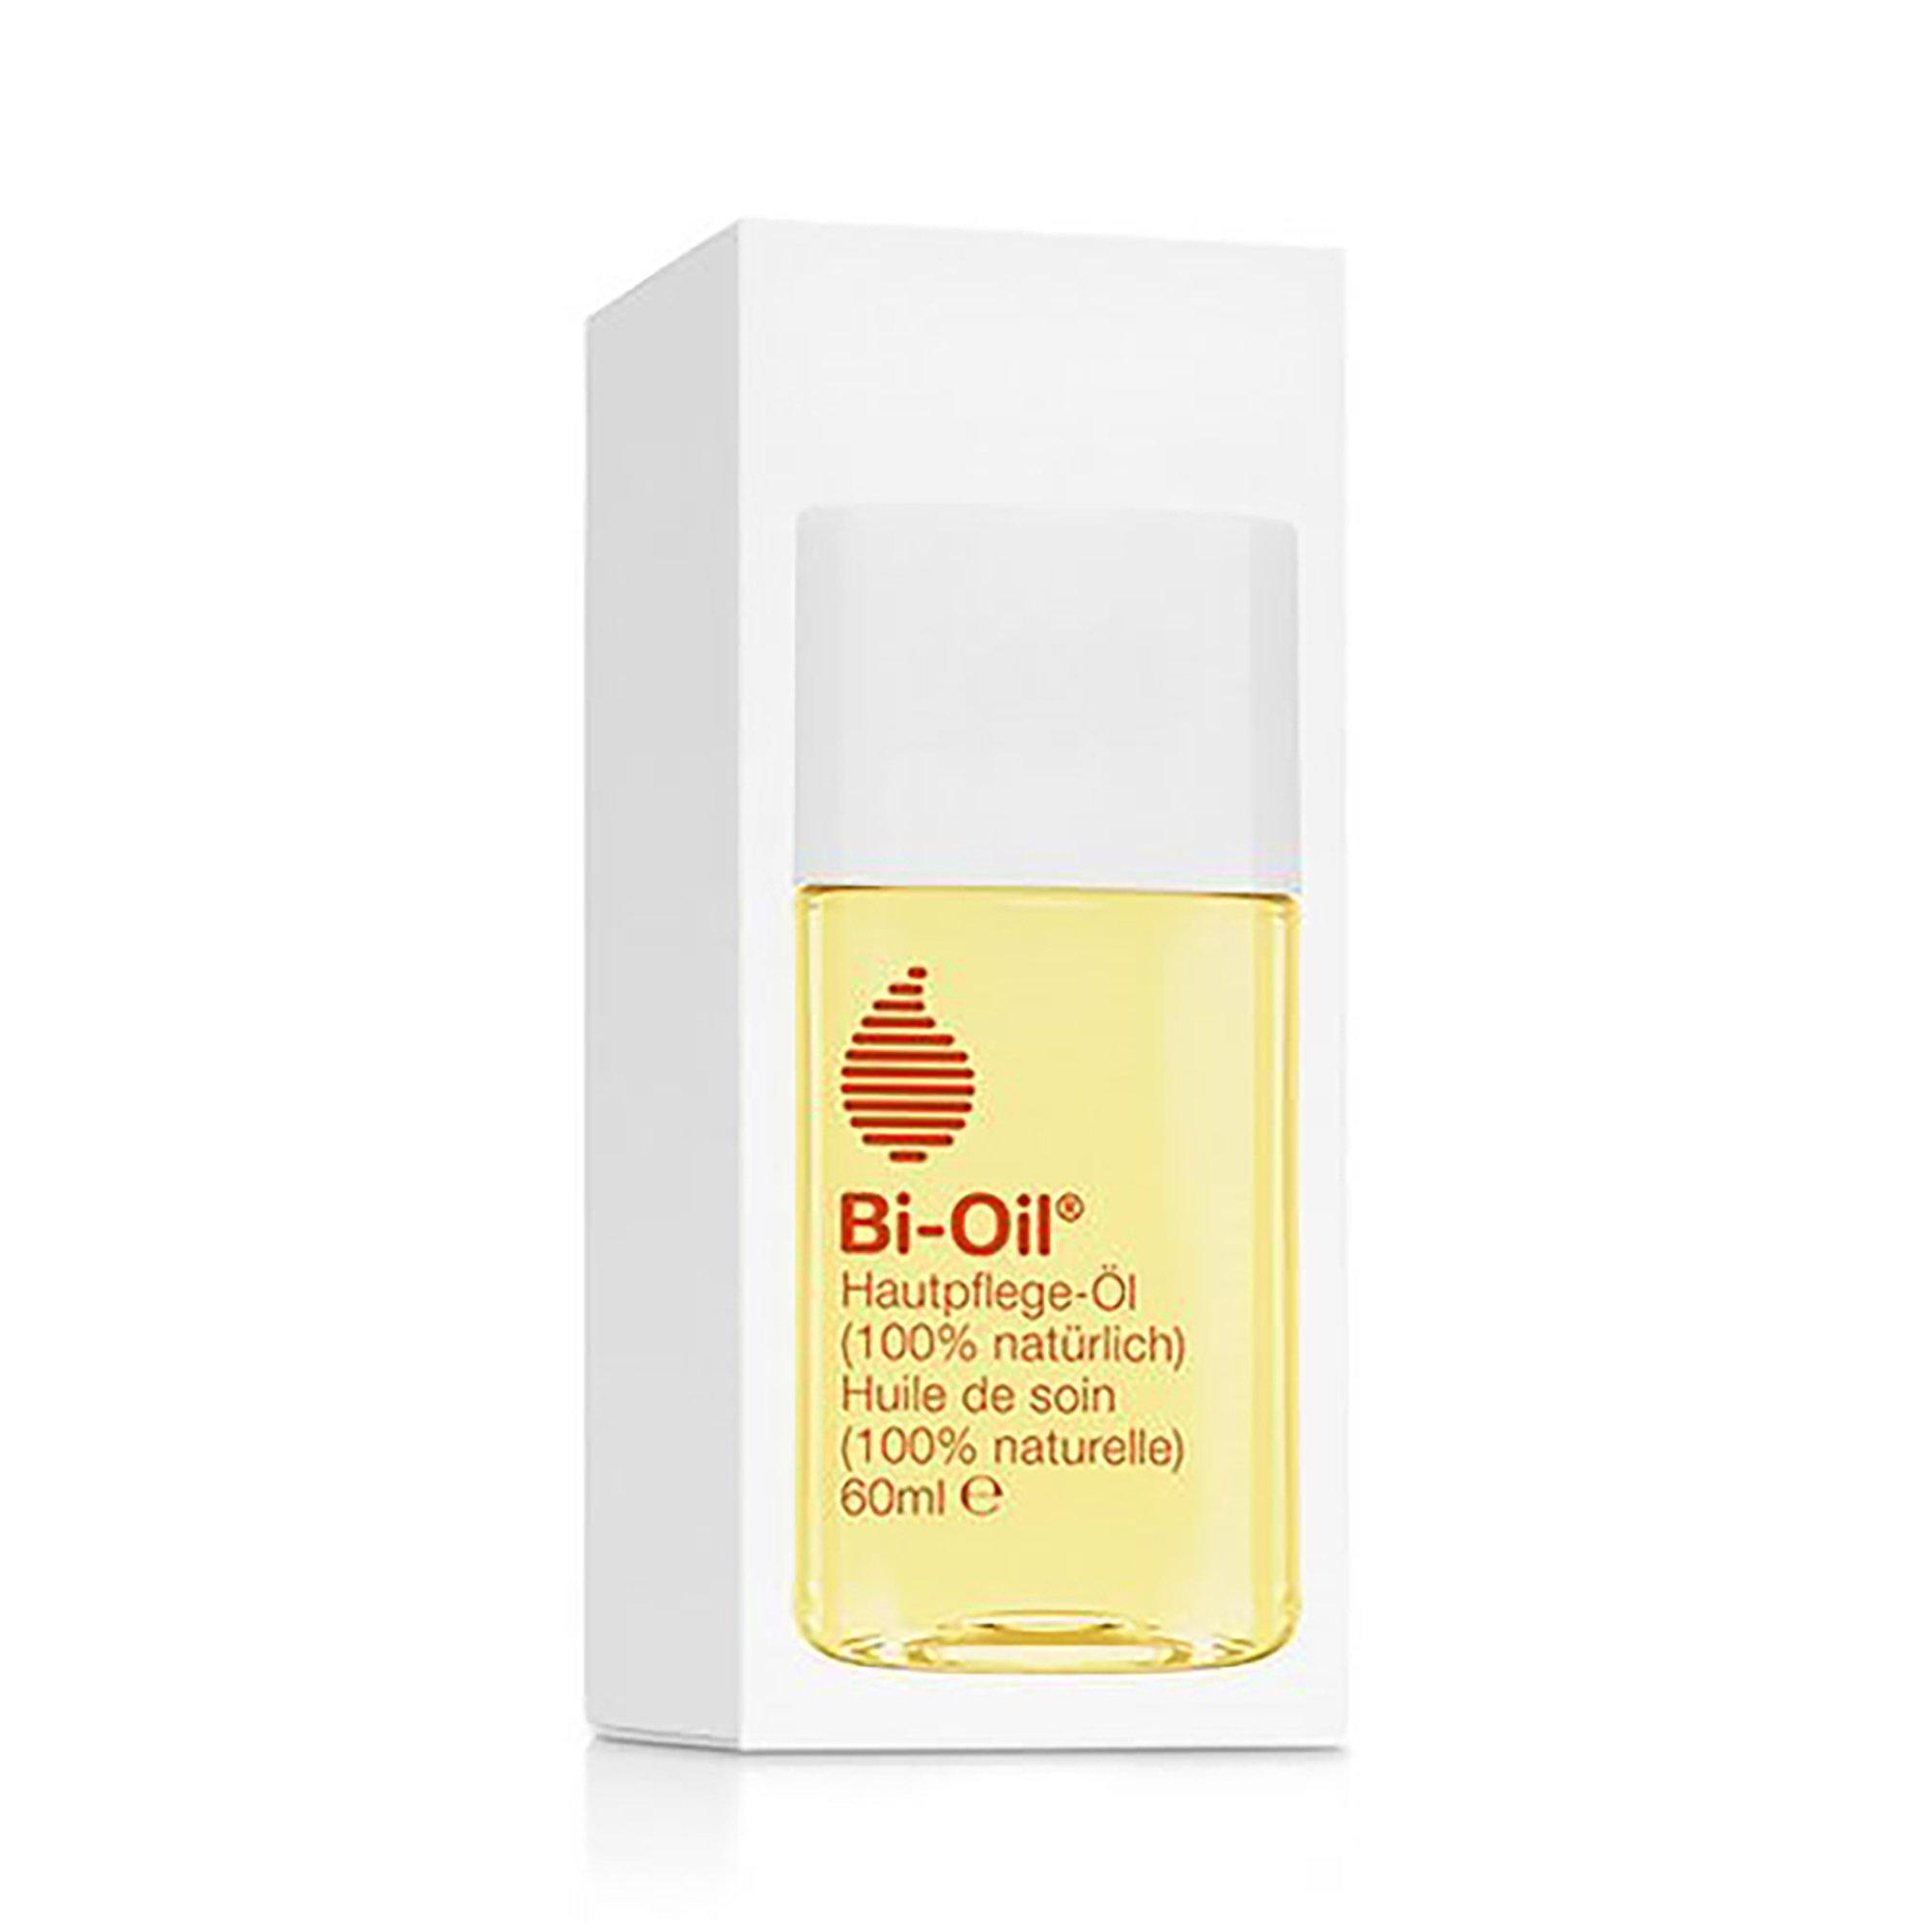 Image of Bi-Oil Bi-Oil Hautpflegeöl, 100% natürliche Inhaltsstoffe Hautpflegeöl, 100% natürliche Inhaltsstoffe - 60 ml